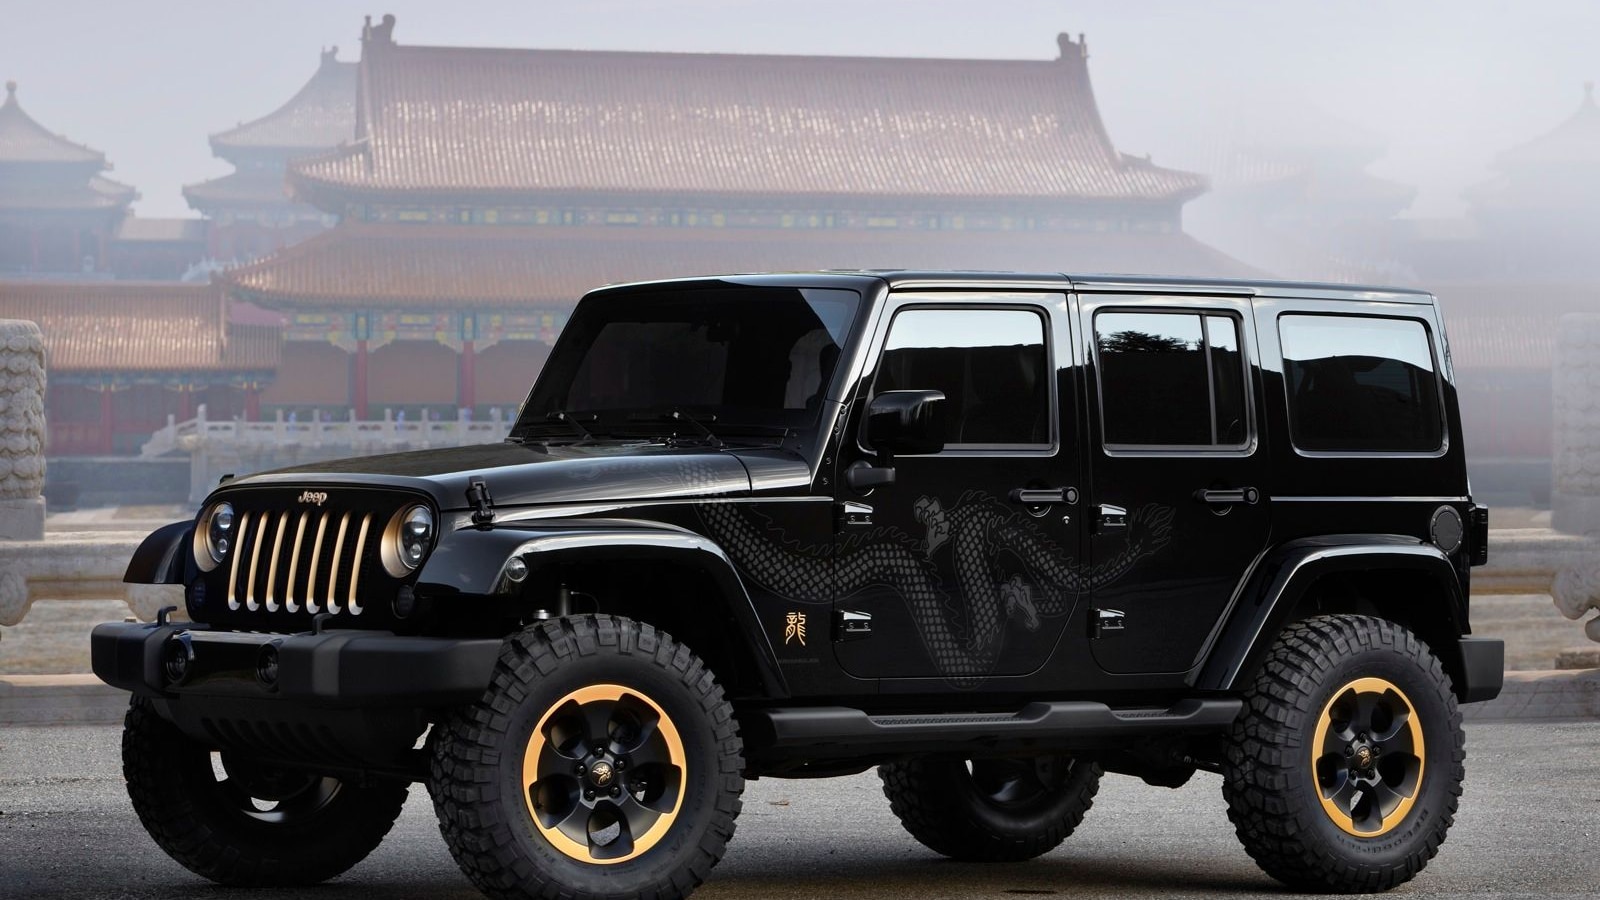 Jeep Wrangler Dragon Design Concept for the 2012 Beijing Auto Show